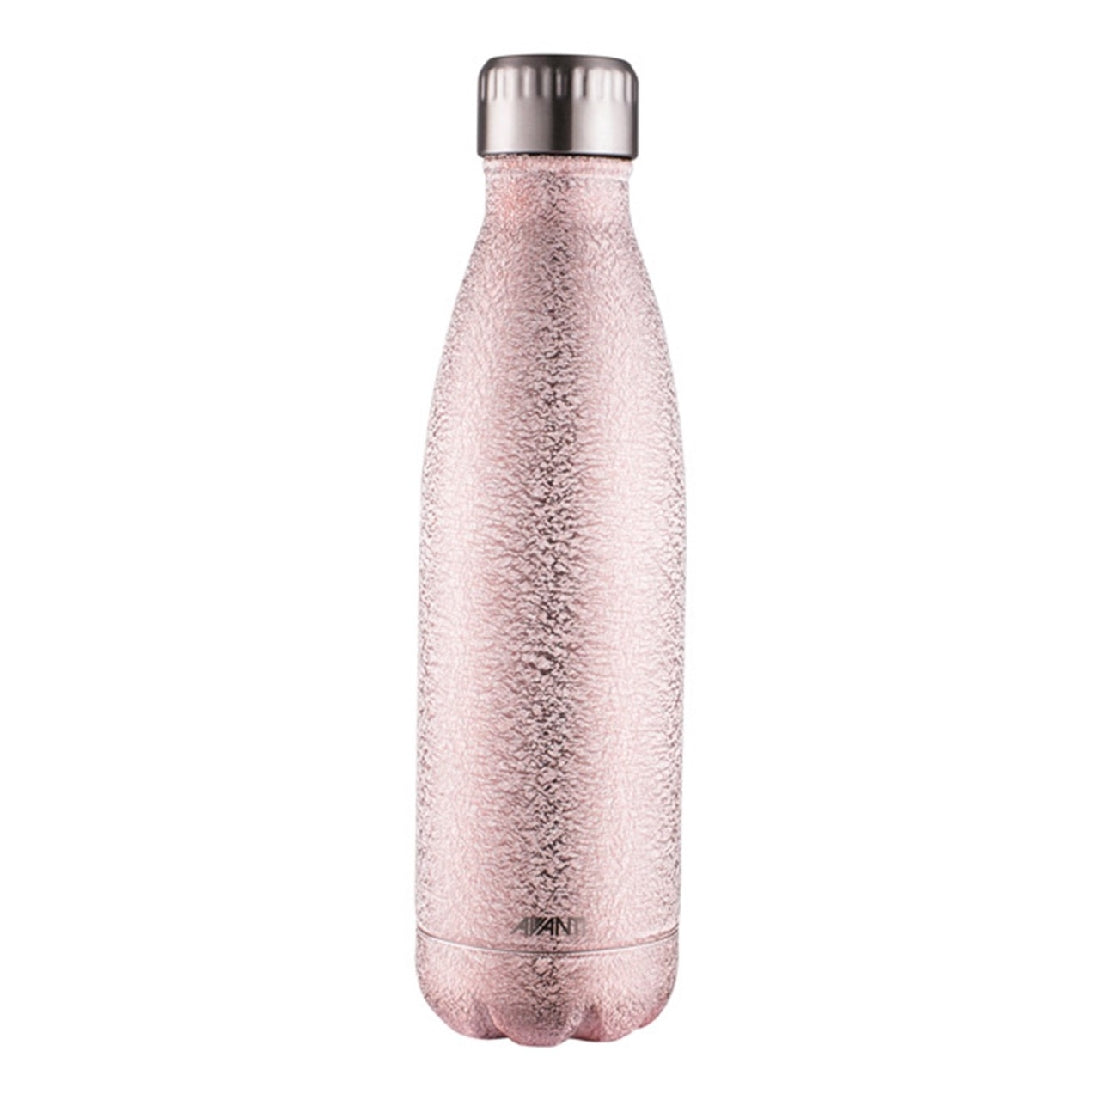 Avanti Fluid Vacuum Bottle - 500ml - Glimmer Rose Gold